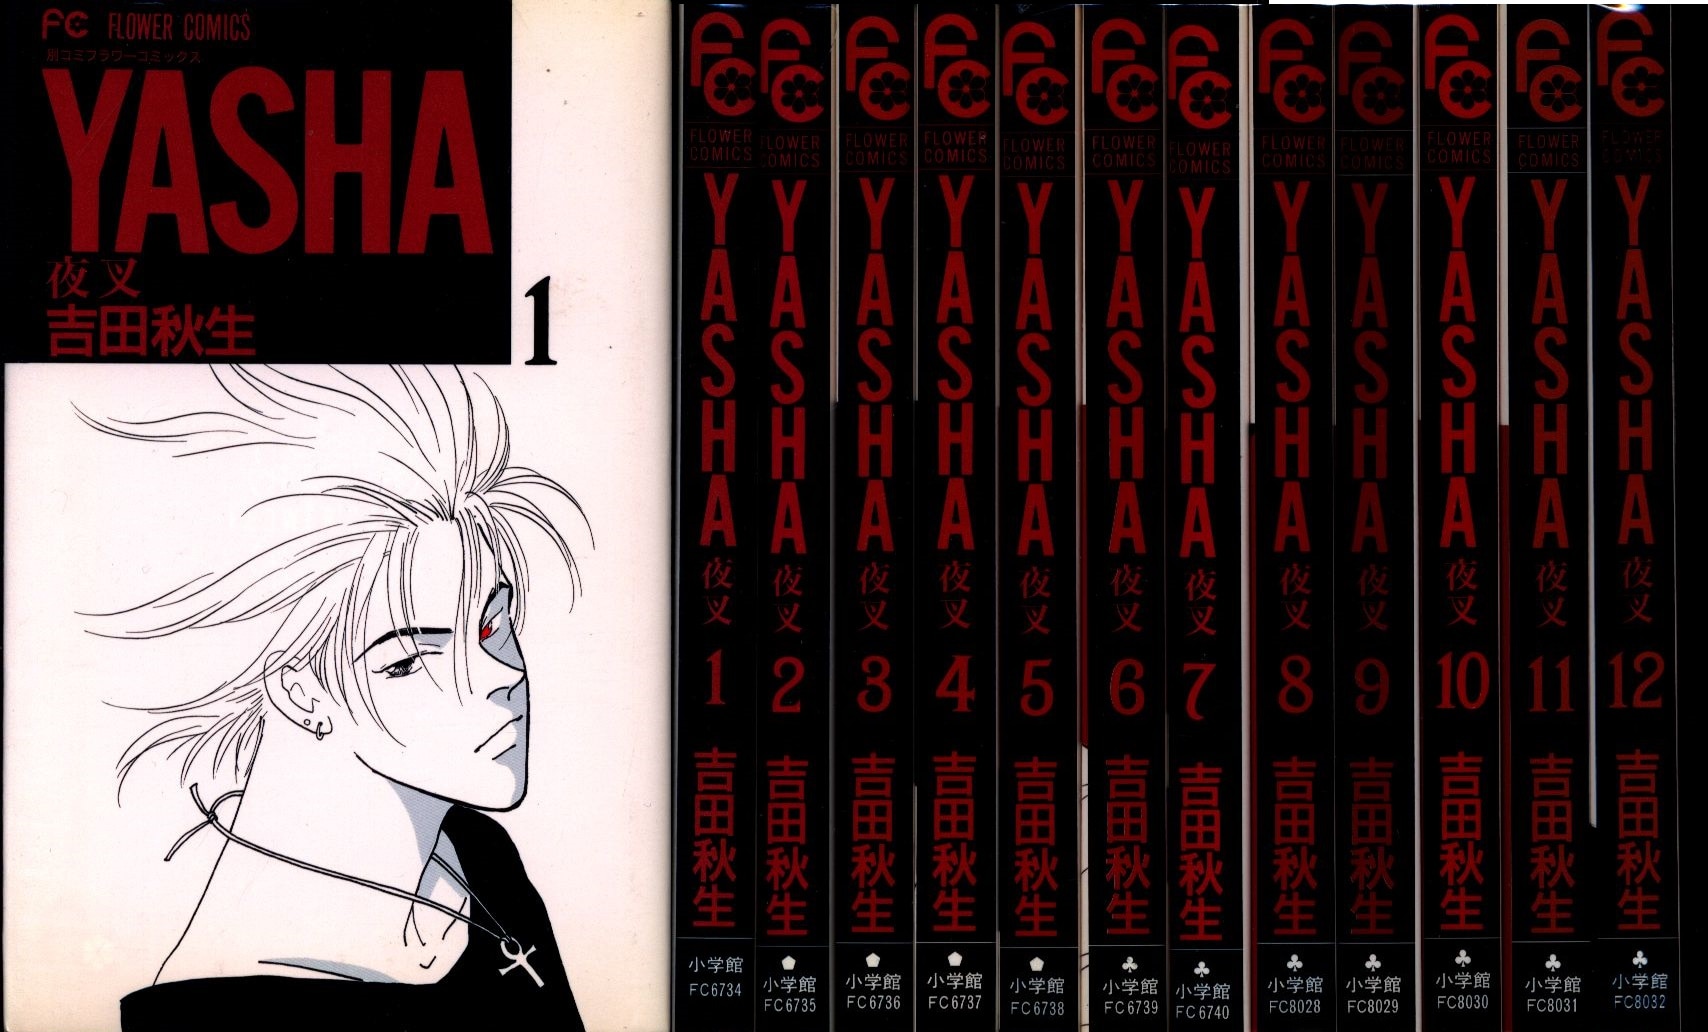 Shogakukan Flower Comics Akimi Yoshida Yasha Yasha Complete 12 Volume Set Mandarake Online Shop